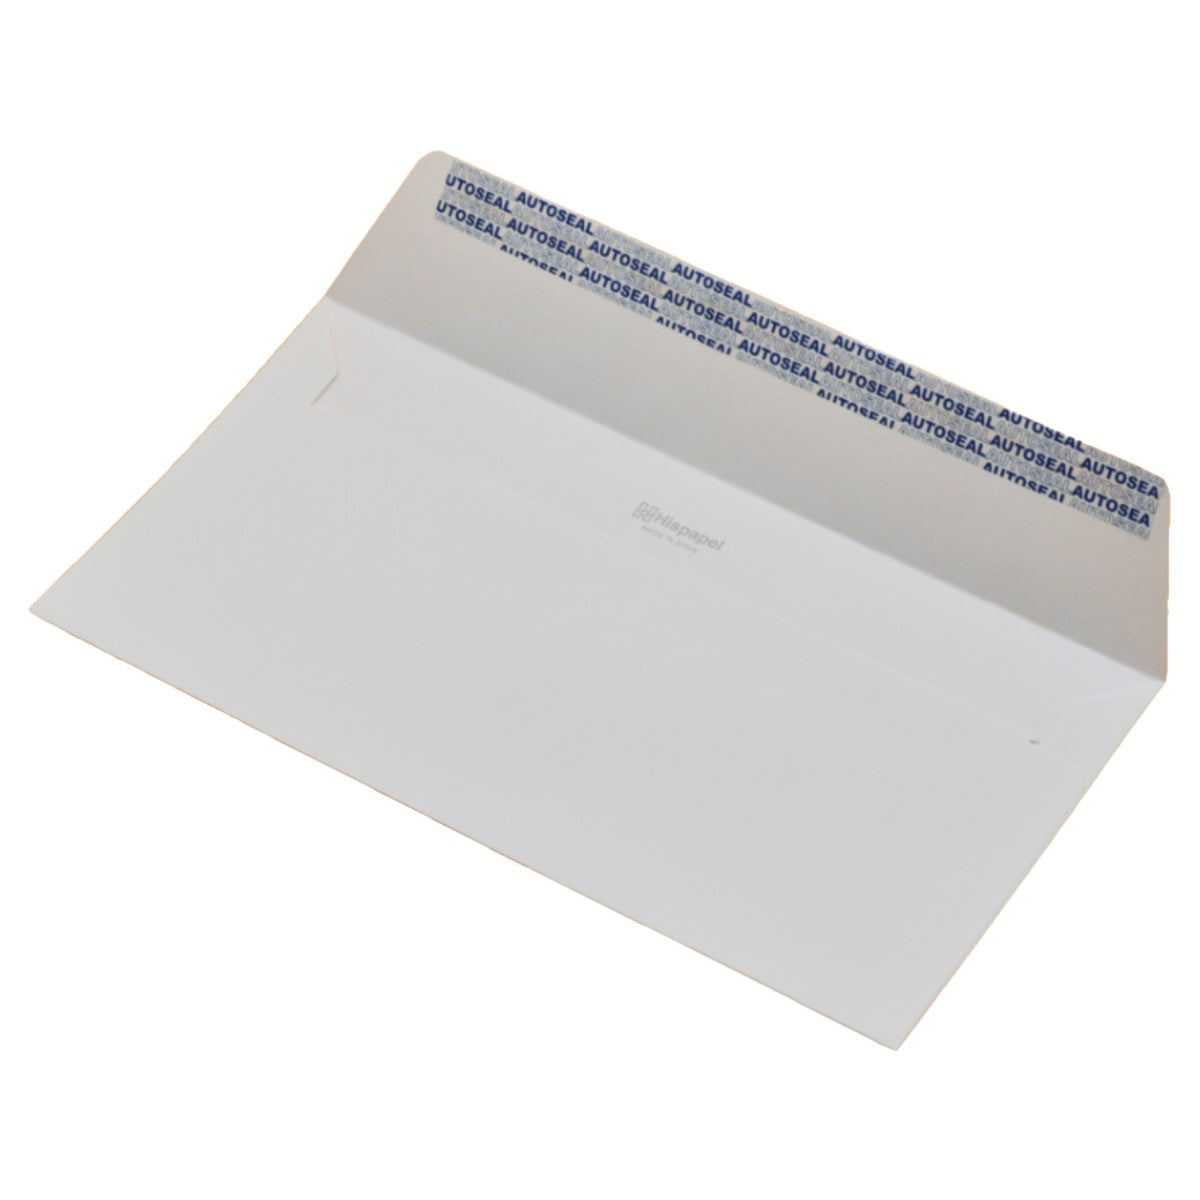 Hispapel Envelope 115 x 225 mm, DL, White